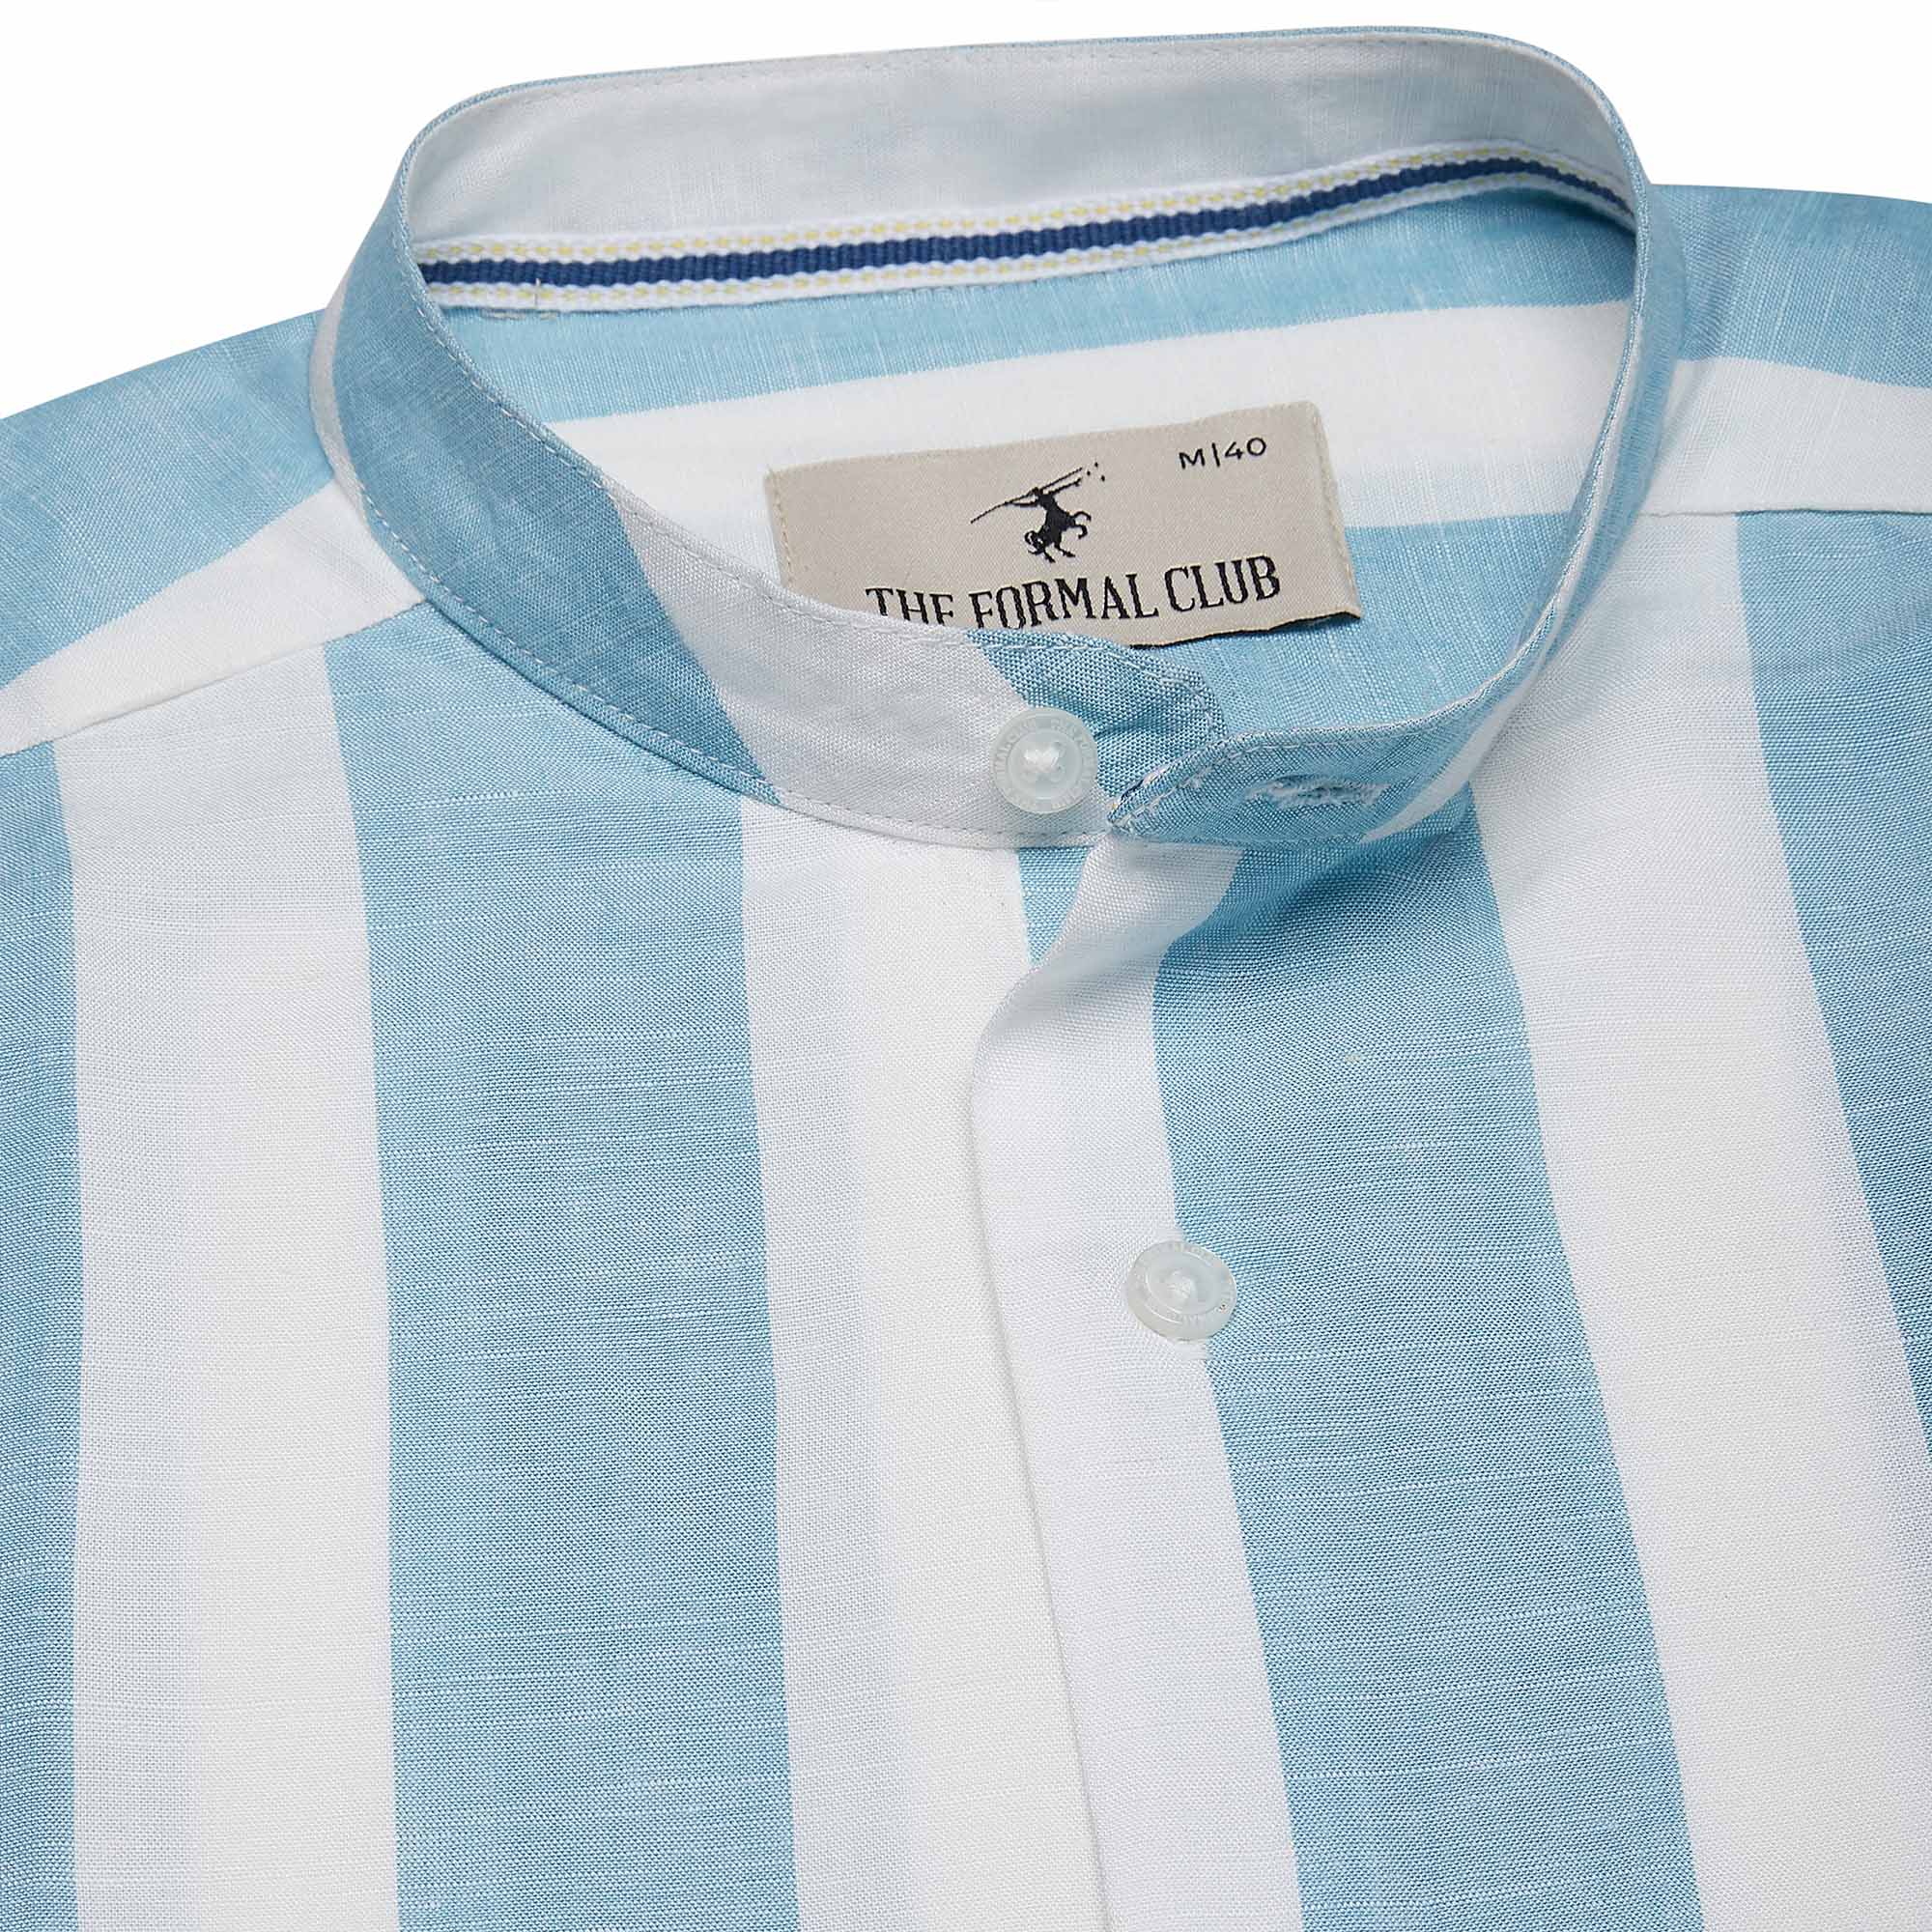 Luna Lenin Stripes Shirt In Blue & White - The Formal Club